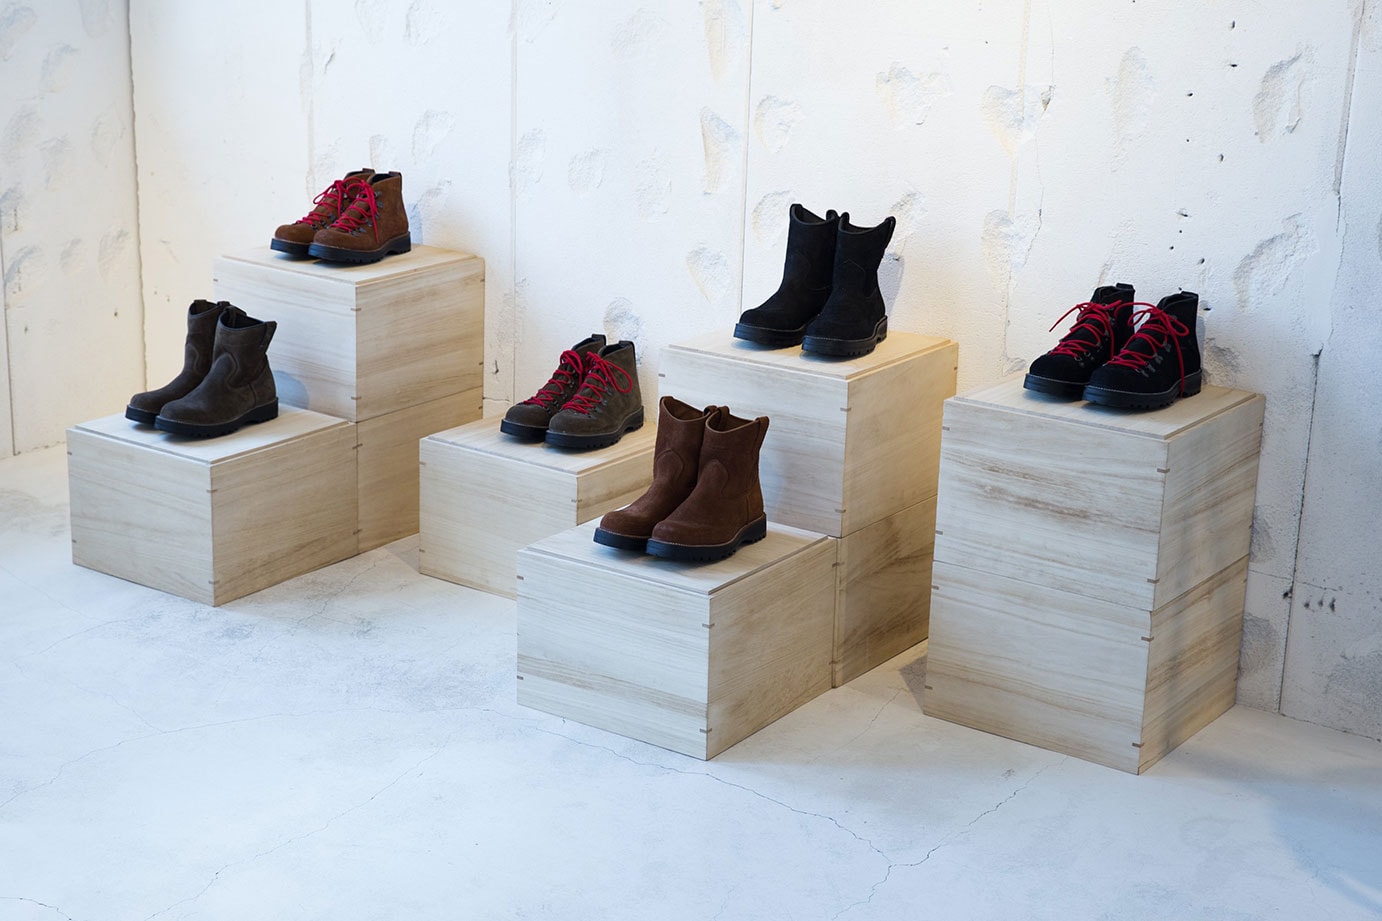 Viberg Rebuild Needles Nepenthes Hakata Exhibtion rebuild japan toyko menswear casual fashion boots footwear outdoors 